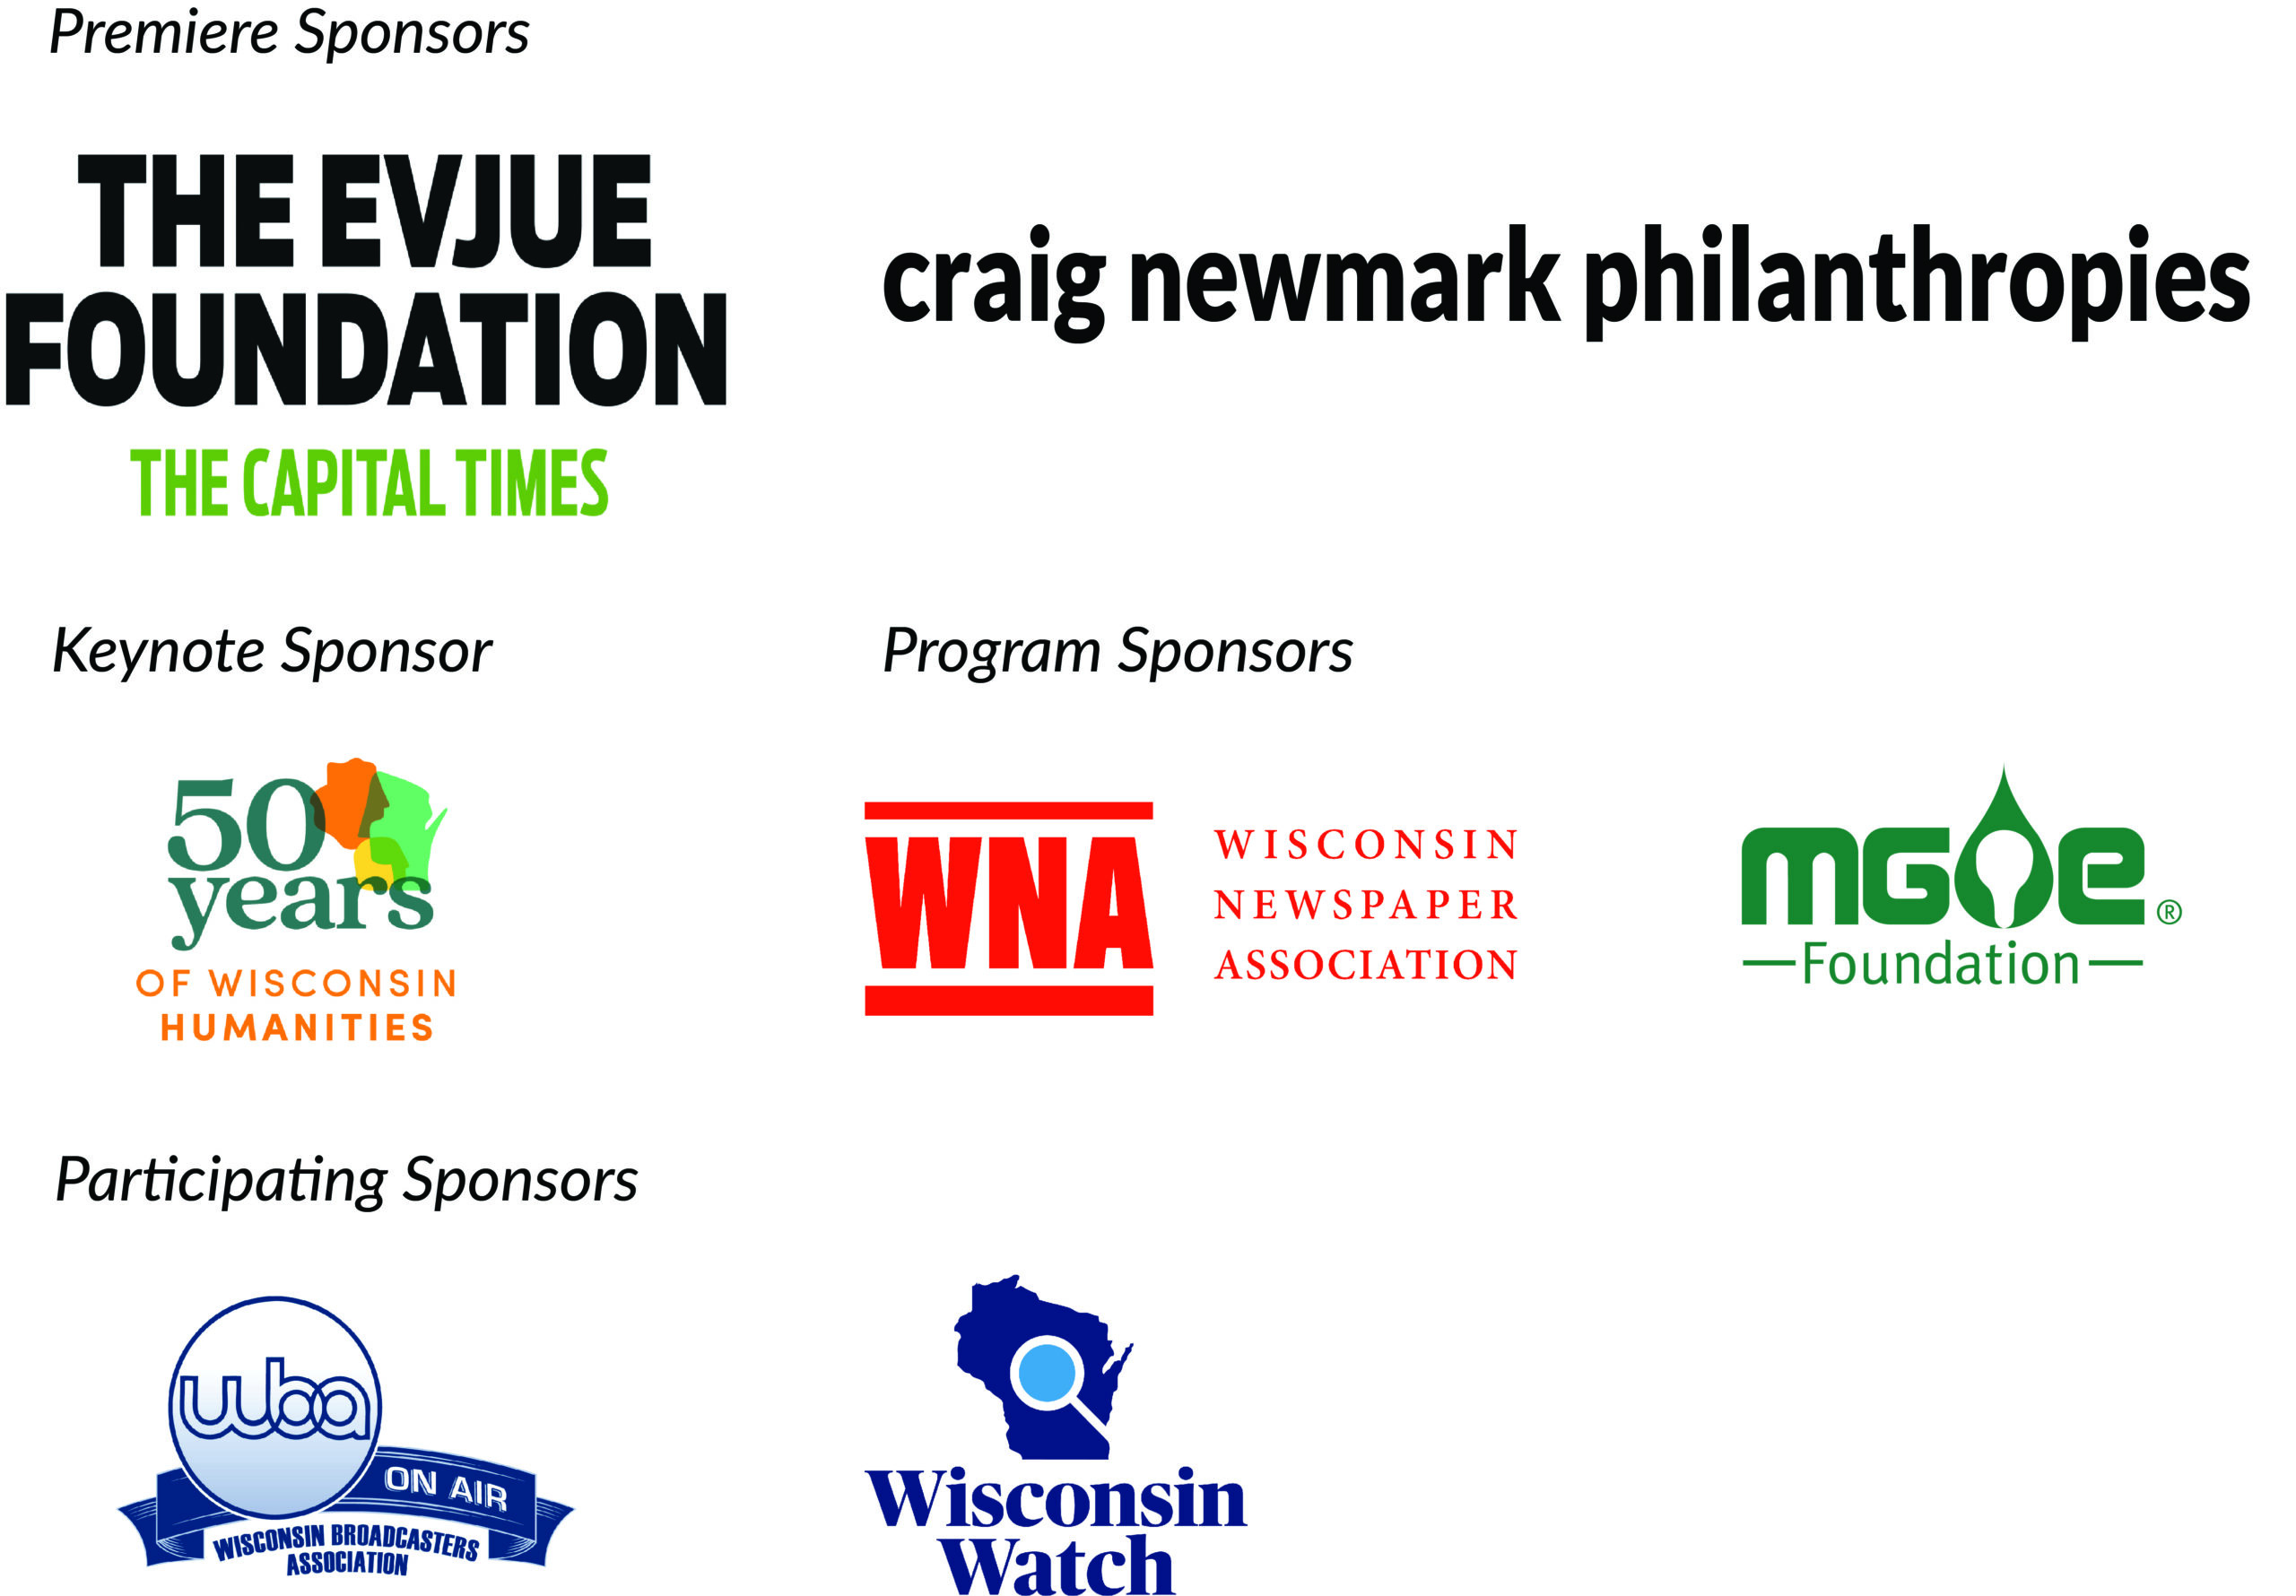 Premier Sponsors: The Evjue Foundation, Craig Newmark Philanthropies; Keynote Sponsor: Wisconsin Humanities Council; Program Sponsors: Wisconsin Newspaper Association, MG&E Foundation; Participating Sponsors: Wisconsin Broadcasters Association, Wisconsin Watch